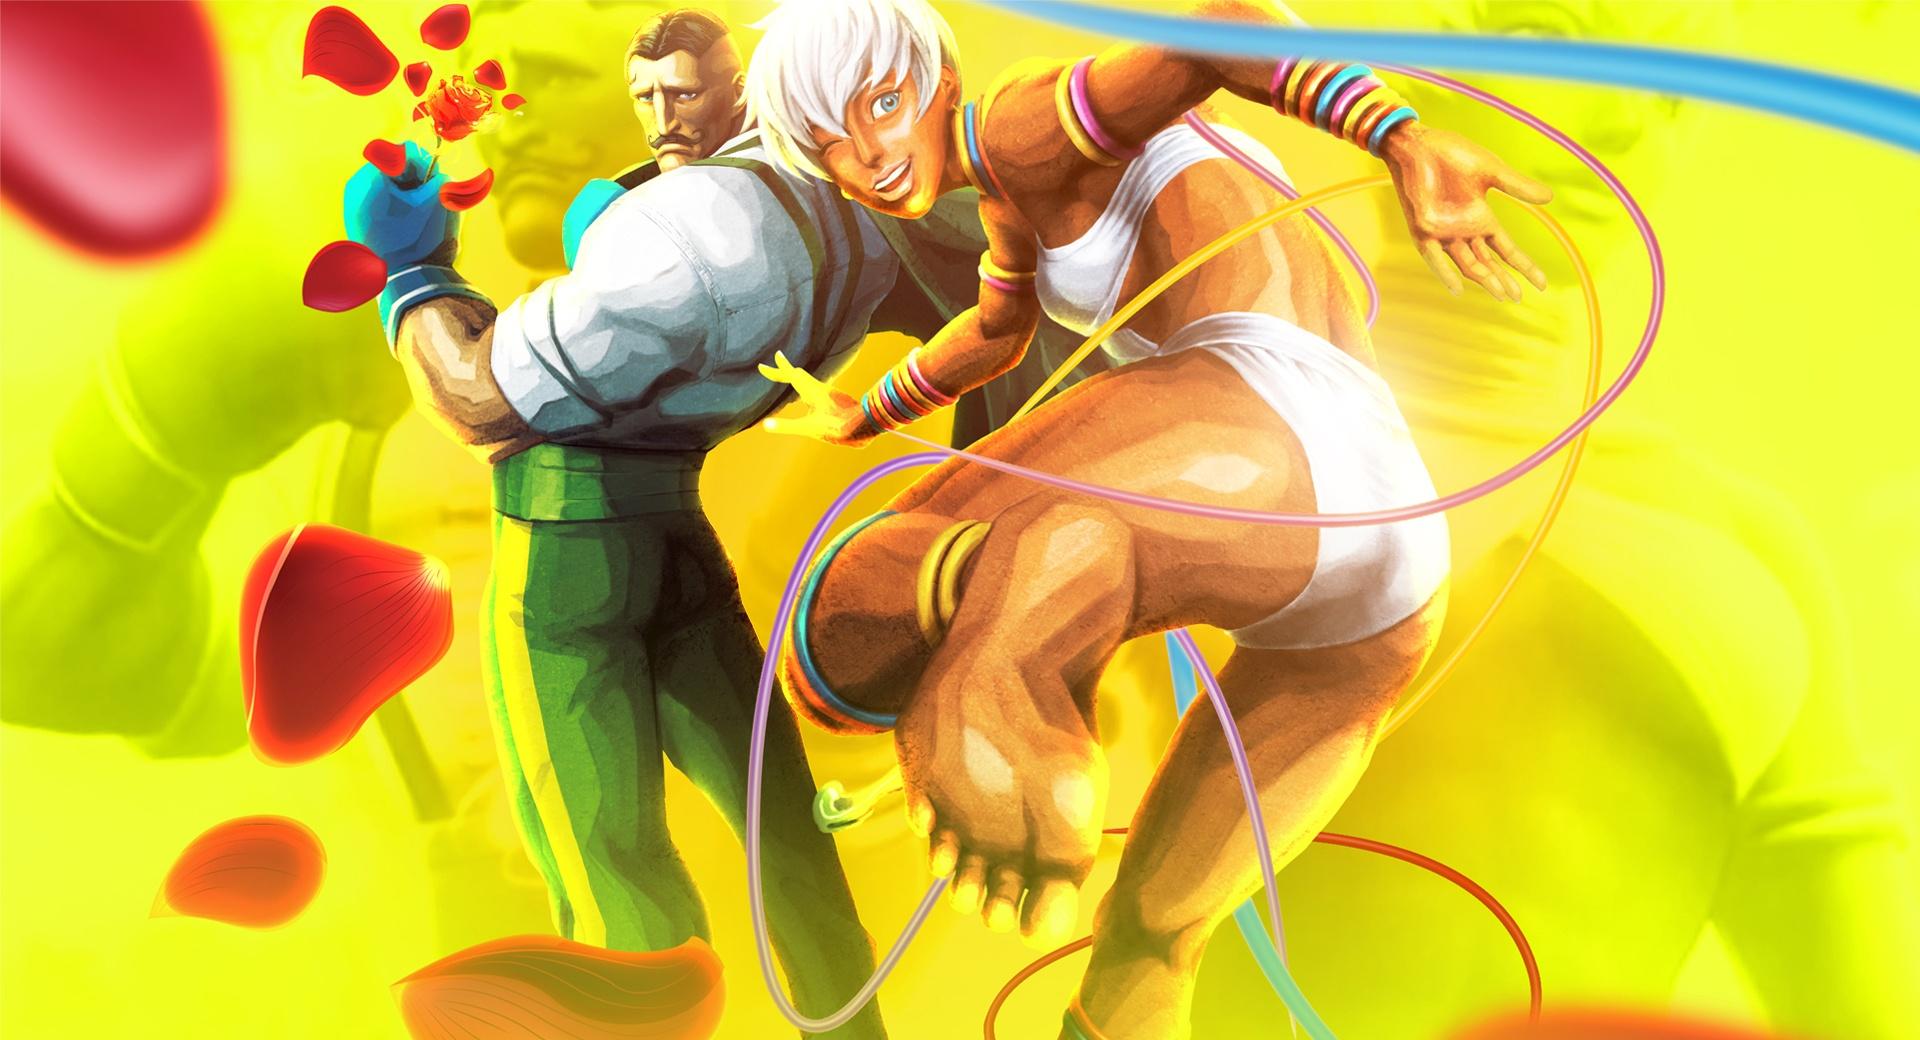 Street Fighter X Tekken - Dudley Elena at 1024 x 1024 iPad size wallpapers HD quality